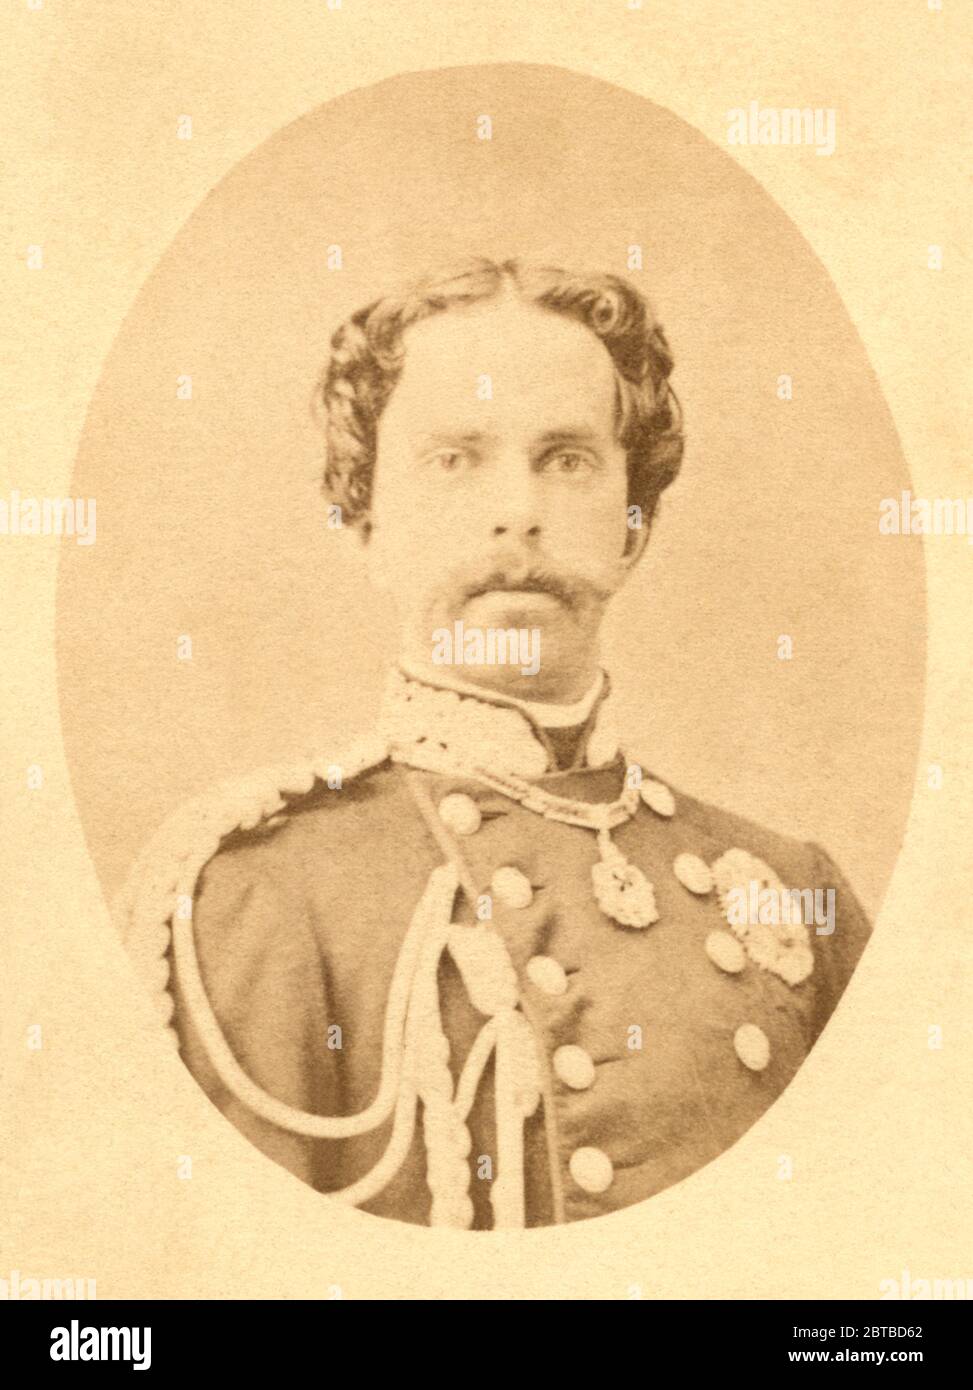 1865 ca. , ROMA ,  ITALY : The  italian King UMBERTO I ( 1844 - 1900 ) when was young, father of future  King VITTORIO EMANUELE III di SAVOIA ( 1869 - 1947 ) . Undentified photographer but possible Henri Le Lieure , Roma. - ITALY  - ITALIA  - CASA SAVOIA - REALI - SAVOY - NOBILITY - ROYALTY - HISTORY - FOTO STORICHE - royalty - nobili - nobiltà italiana  - portrait - ritratto - baffi - moustache - military dress uniform - uniforme divisa militare - RE - REALI --- Archivio GBB Stock Photo